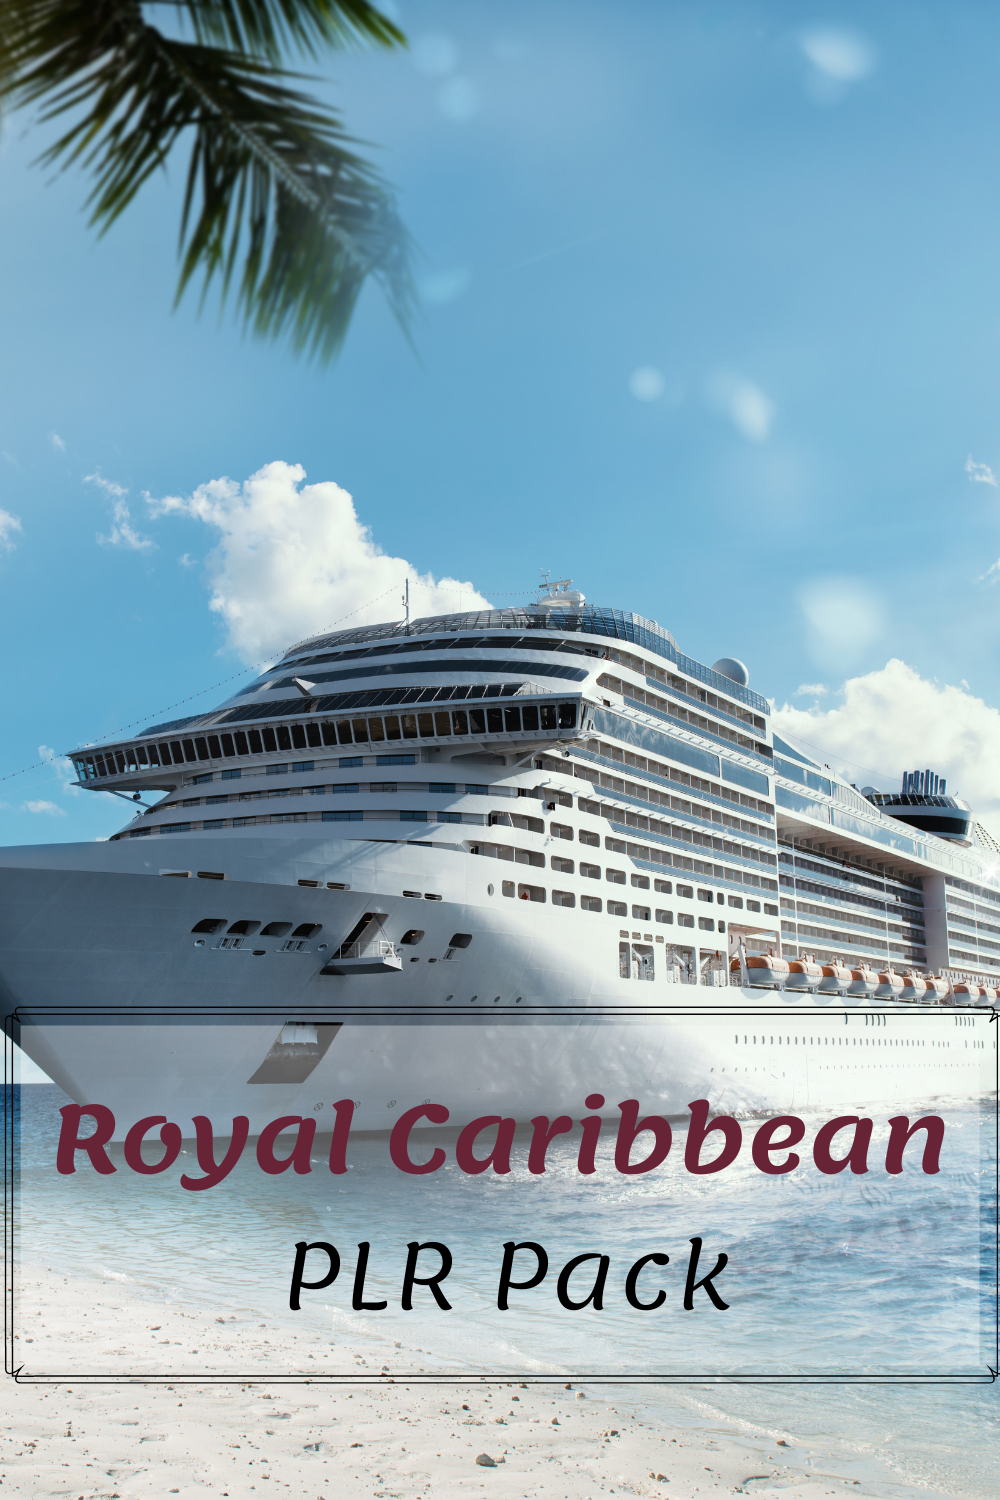 Royal Caribbean PLR Pack #plr #royalcaribbean #cruisetravel